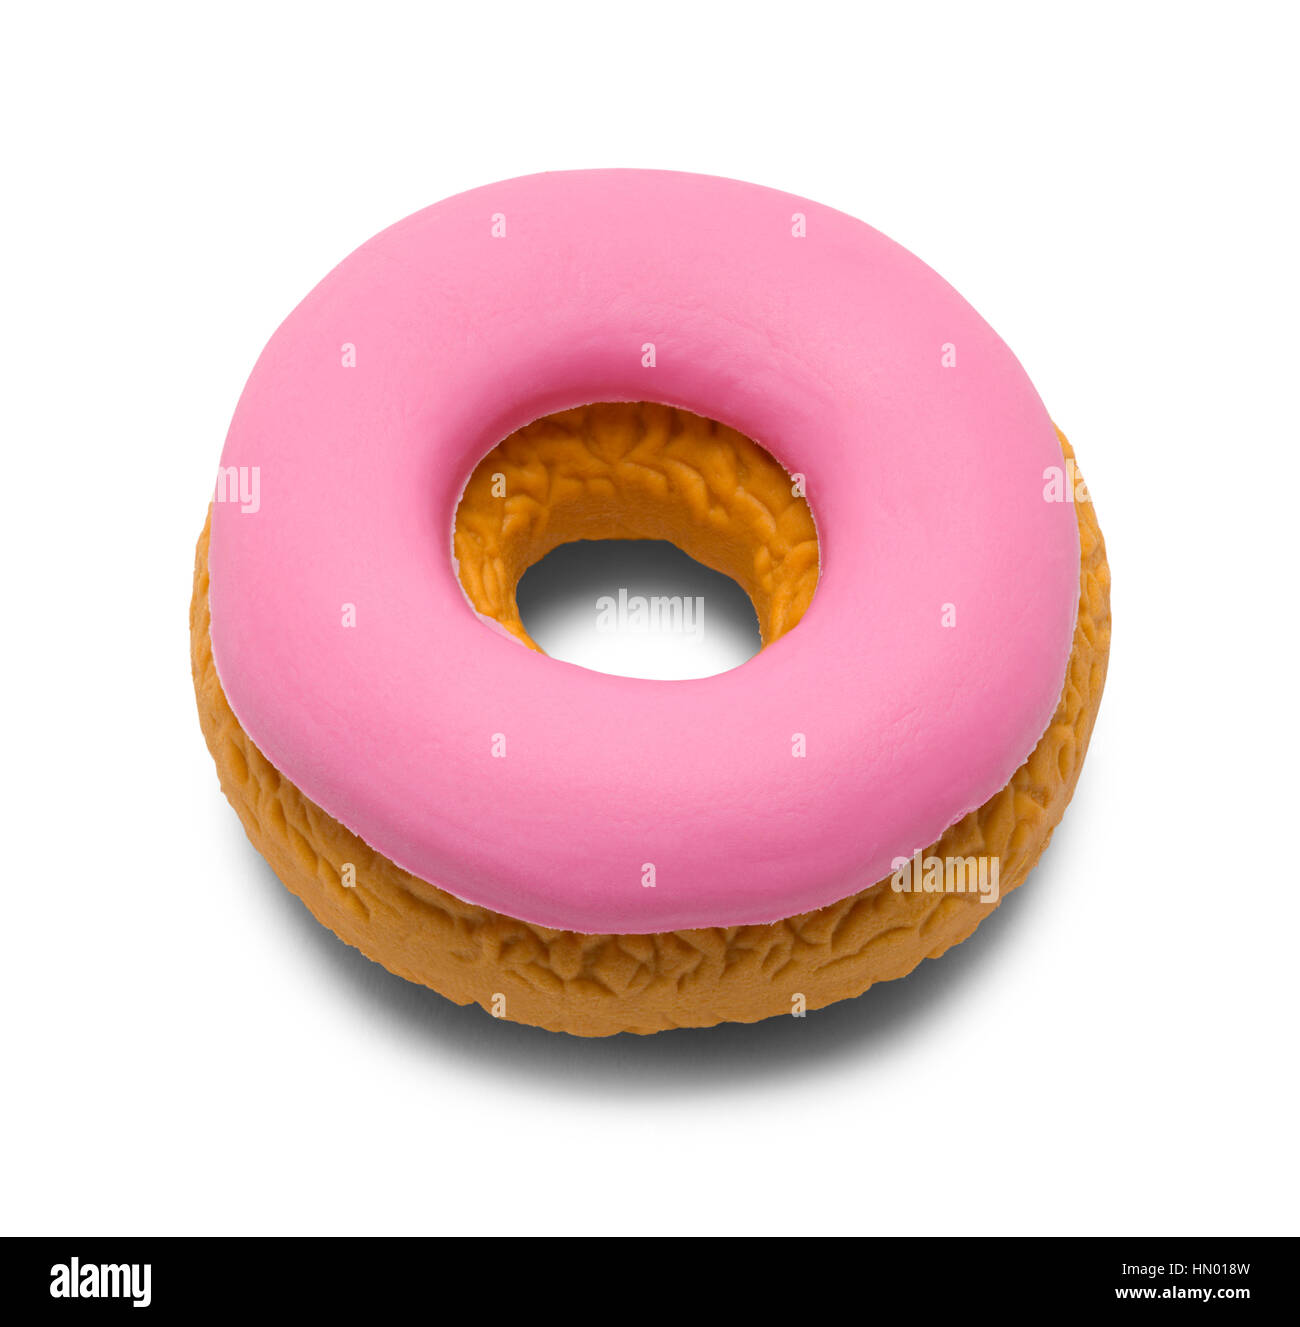 Rosa Rubber Radiergummi Donut Isolated on White Background. Stockfoto